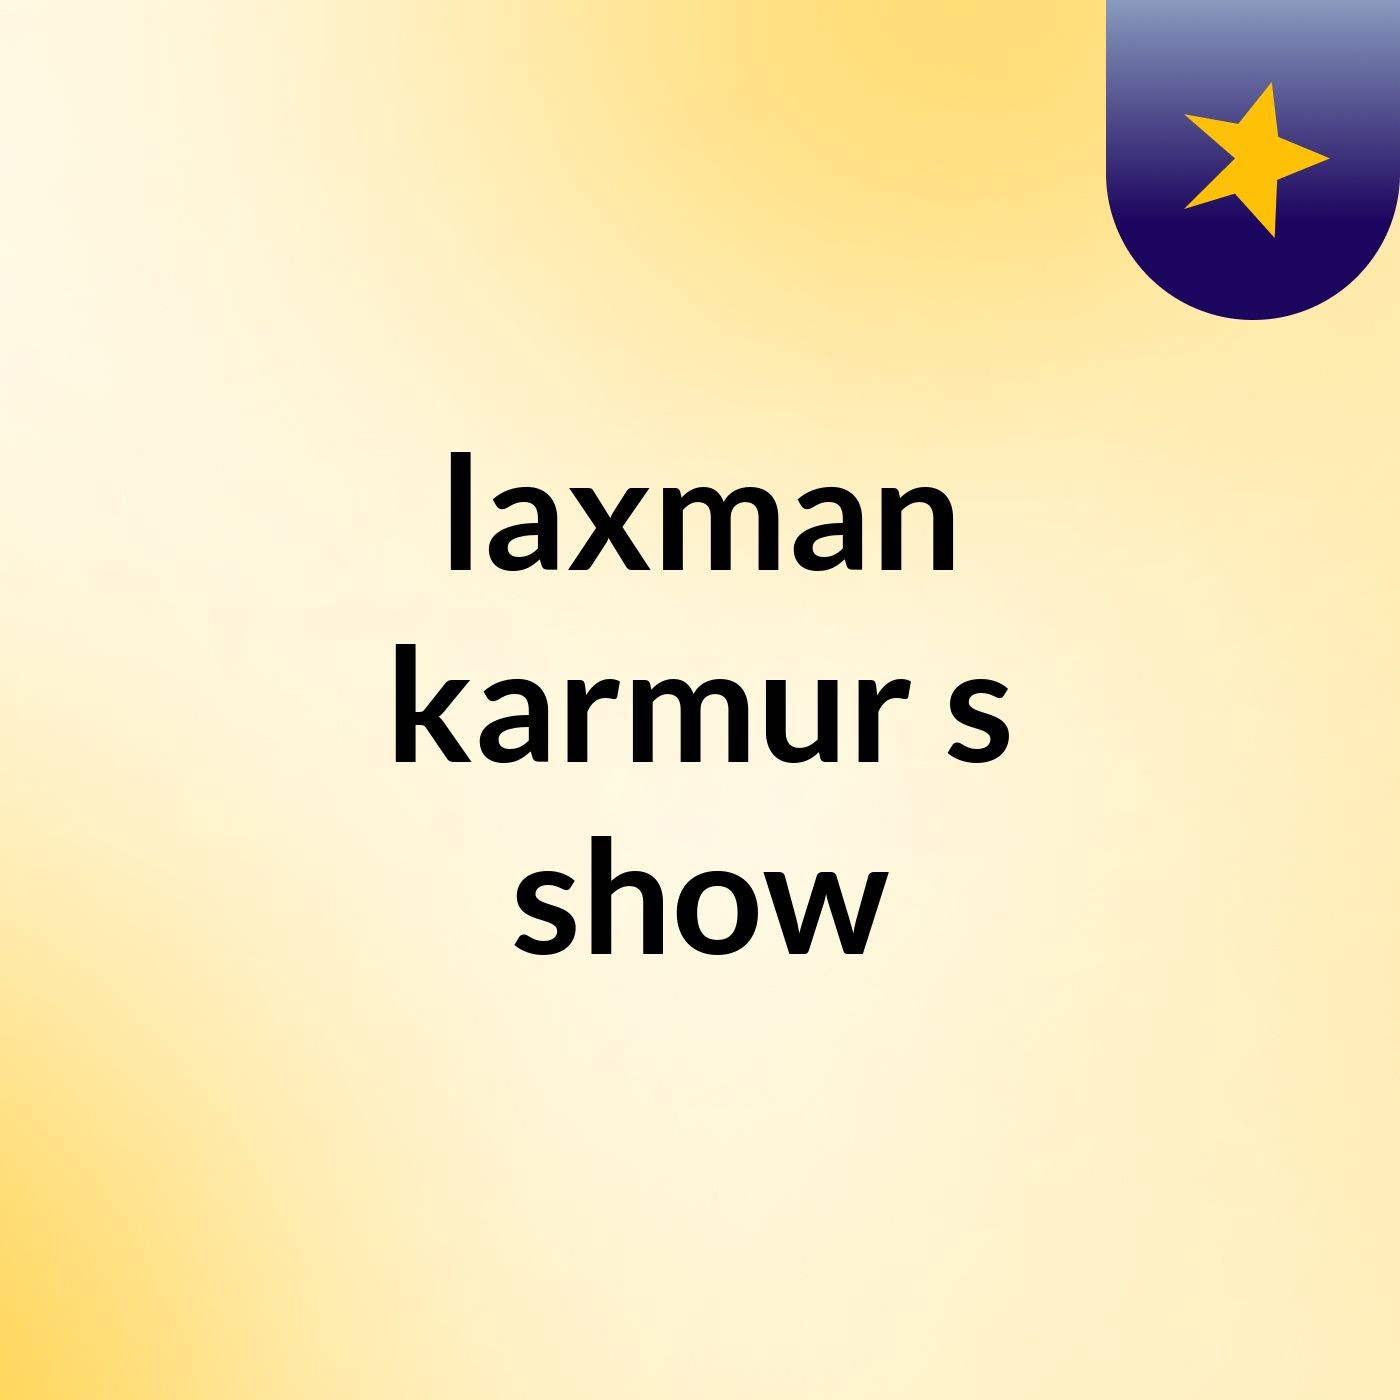 Episode 1 - laxman karmur's show